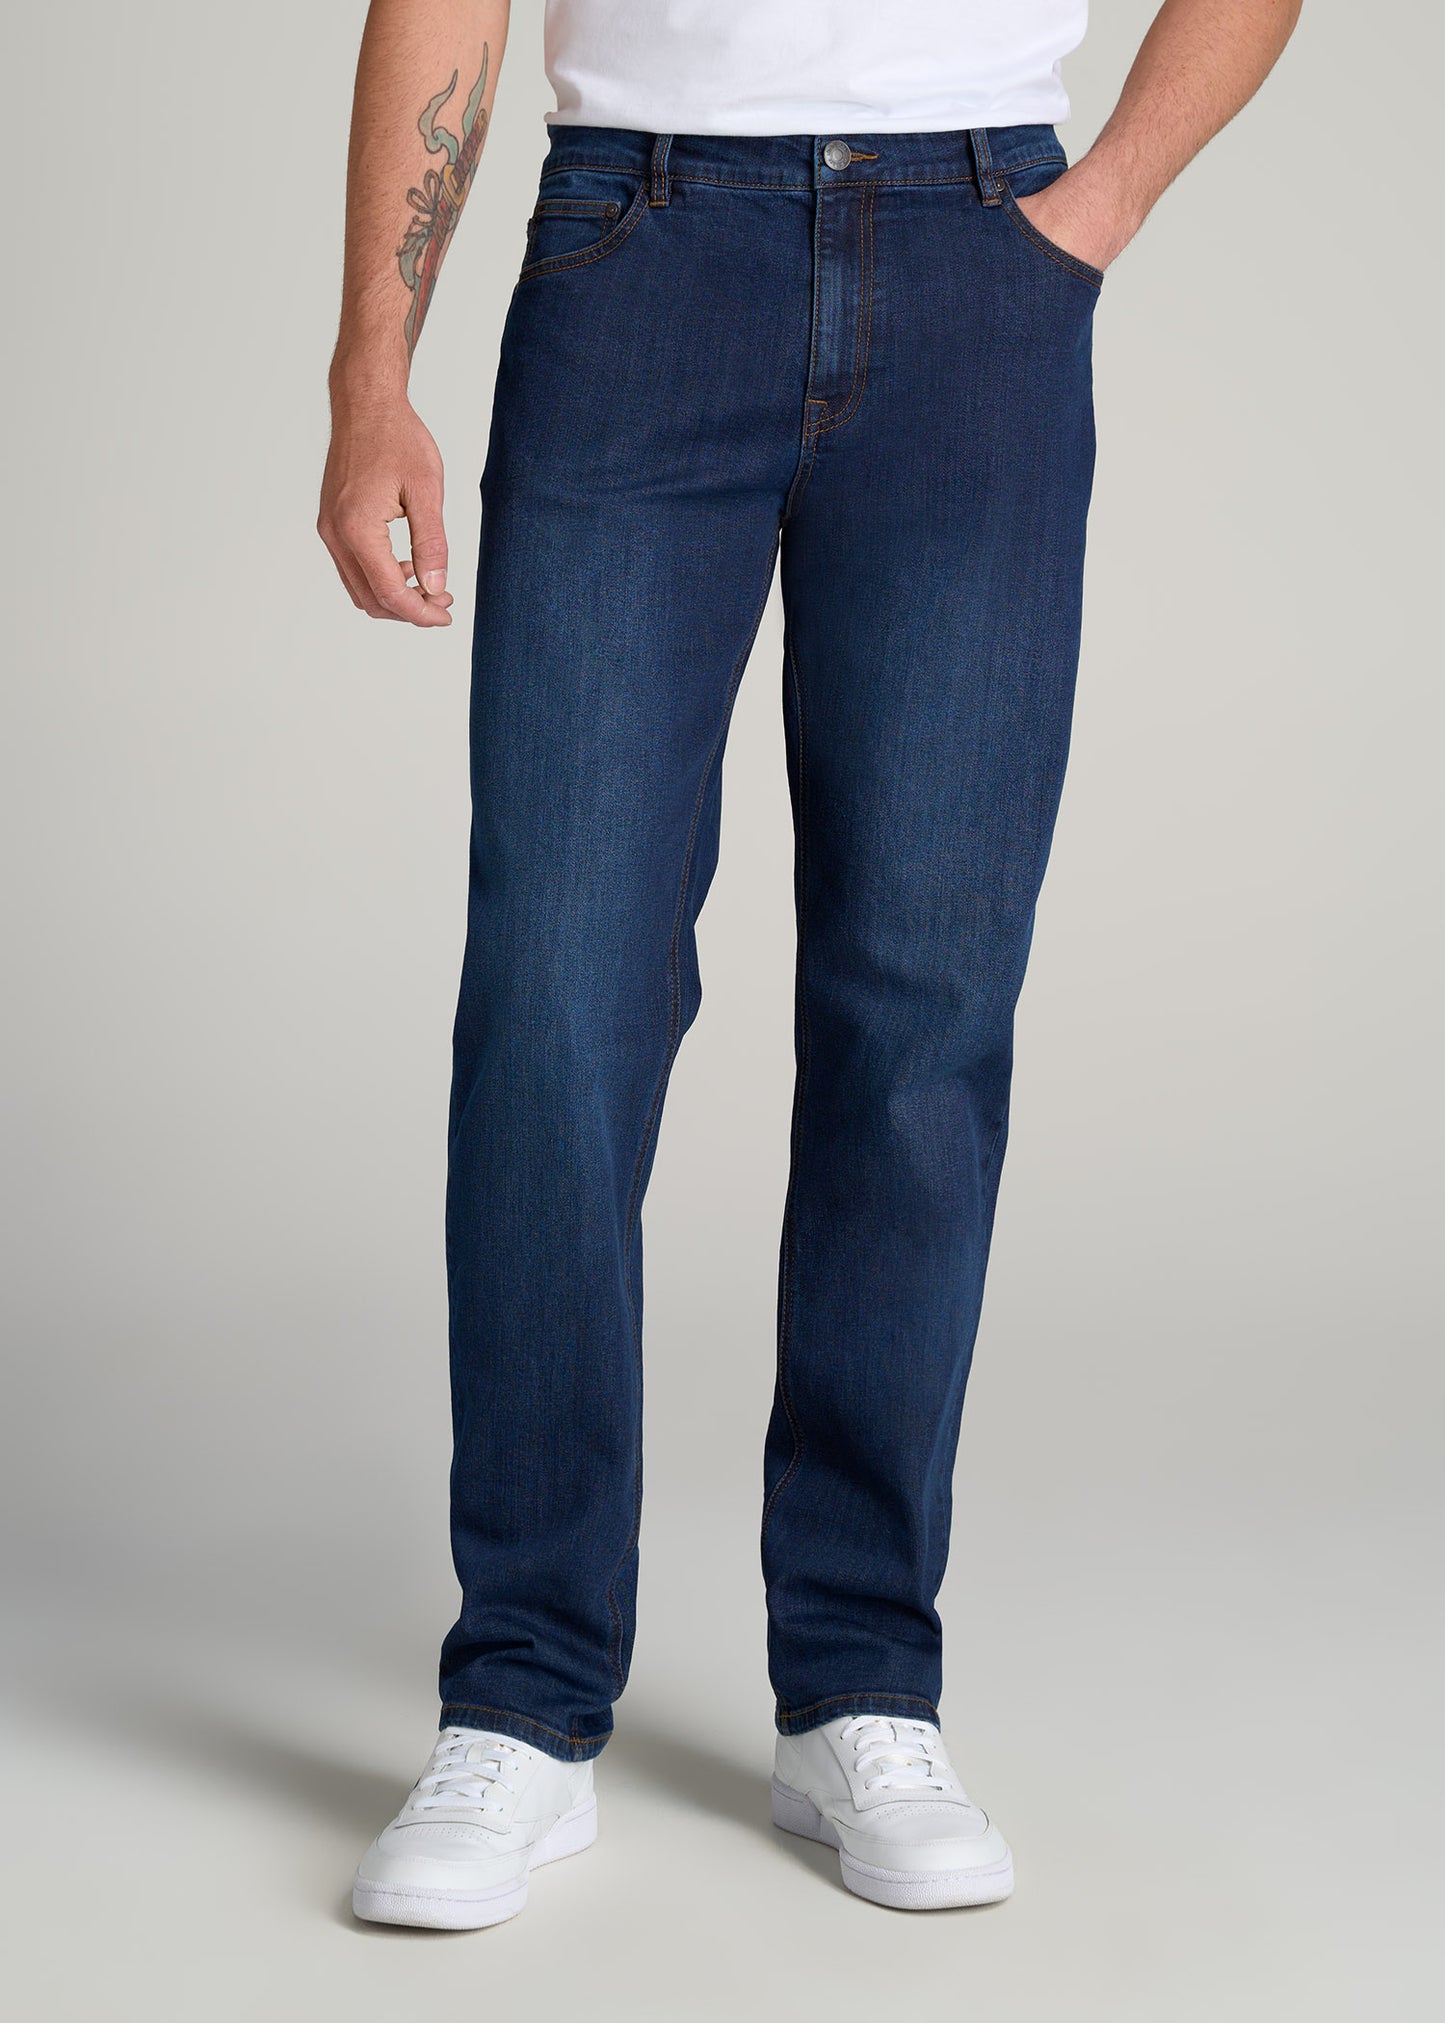 LJ&S Men's Jeans Leg Blue | American Tall